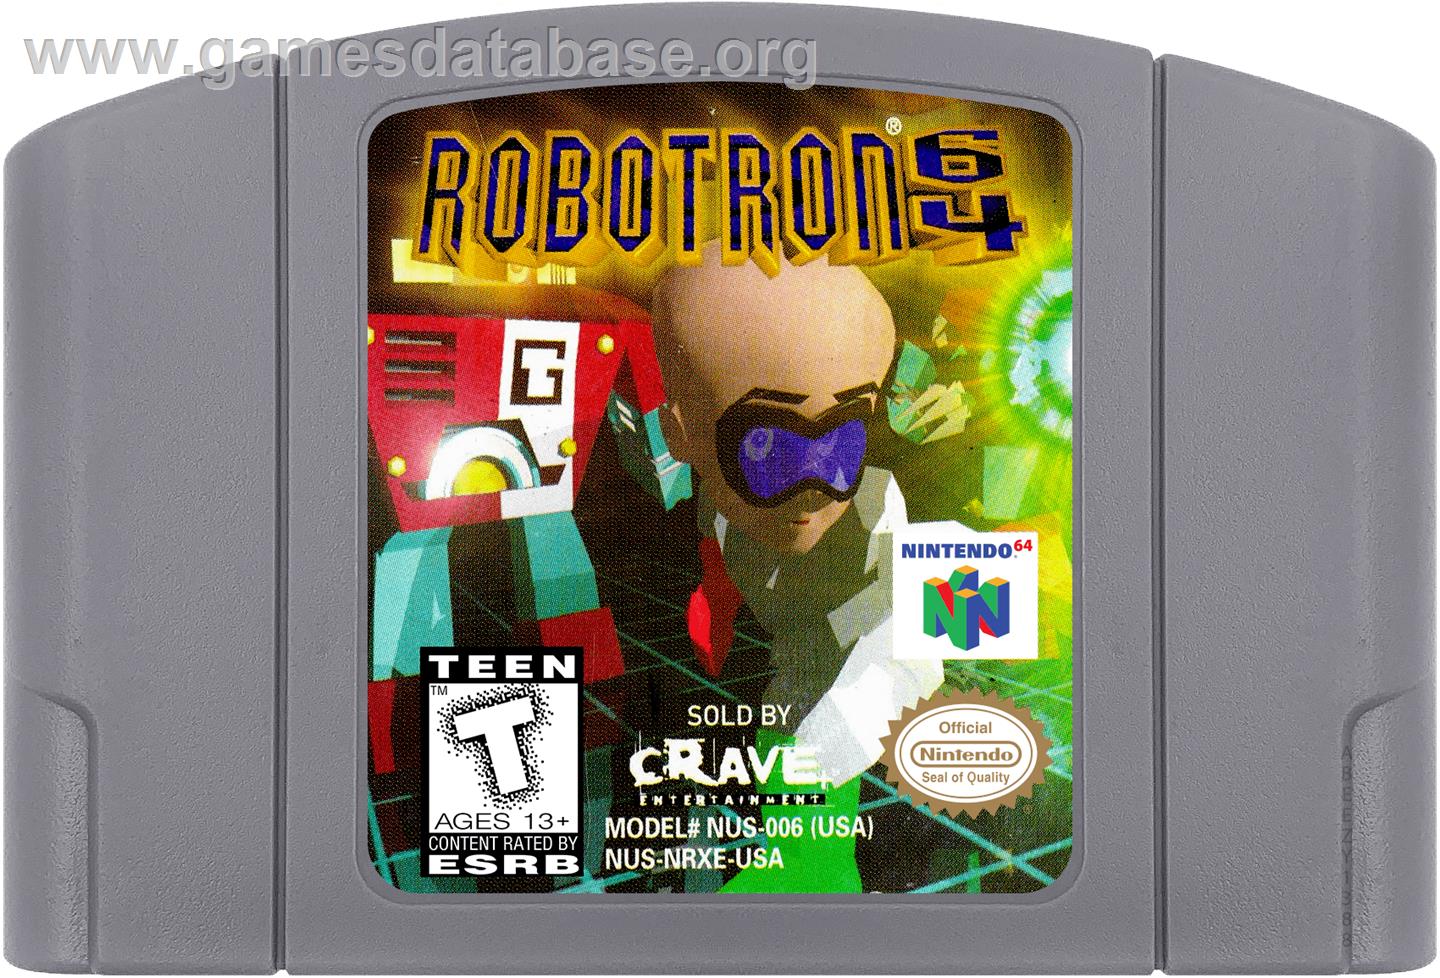 Robotron 64 - Nintendo N64 - Artwork - Cartridge